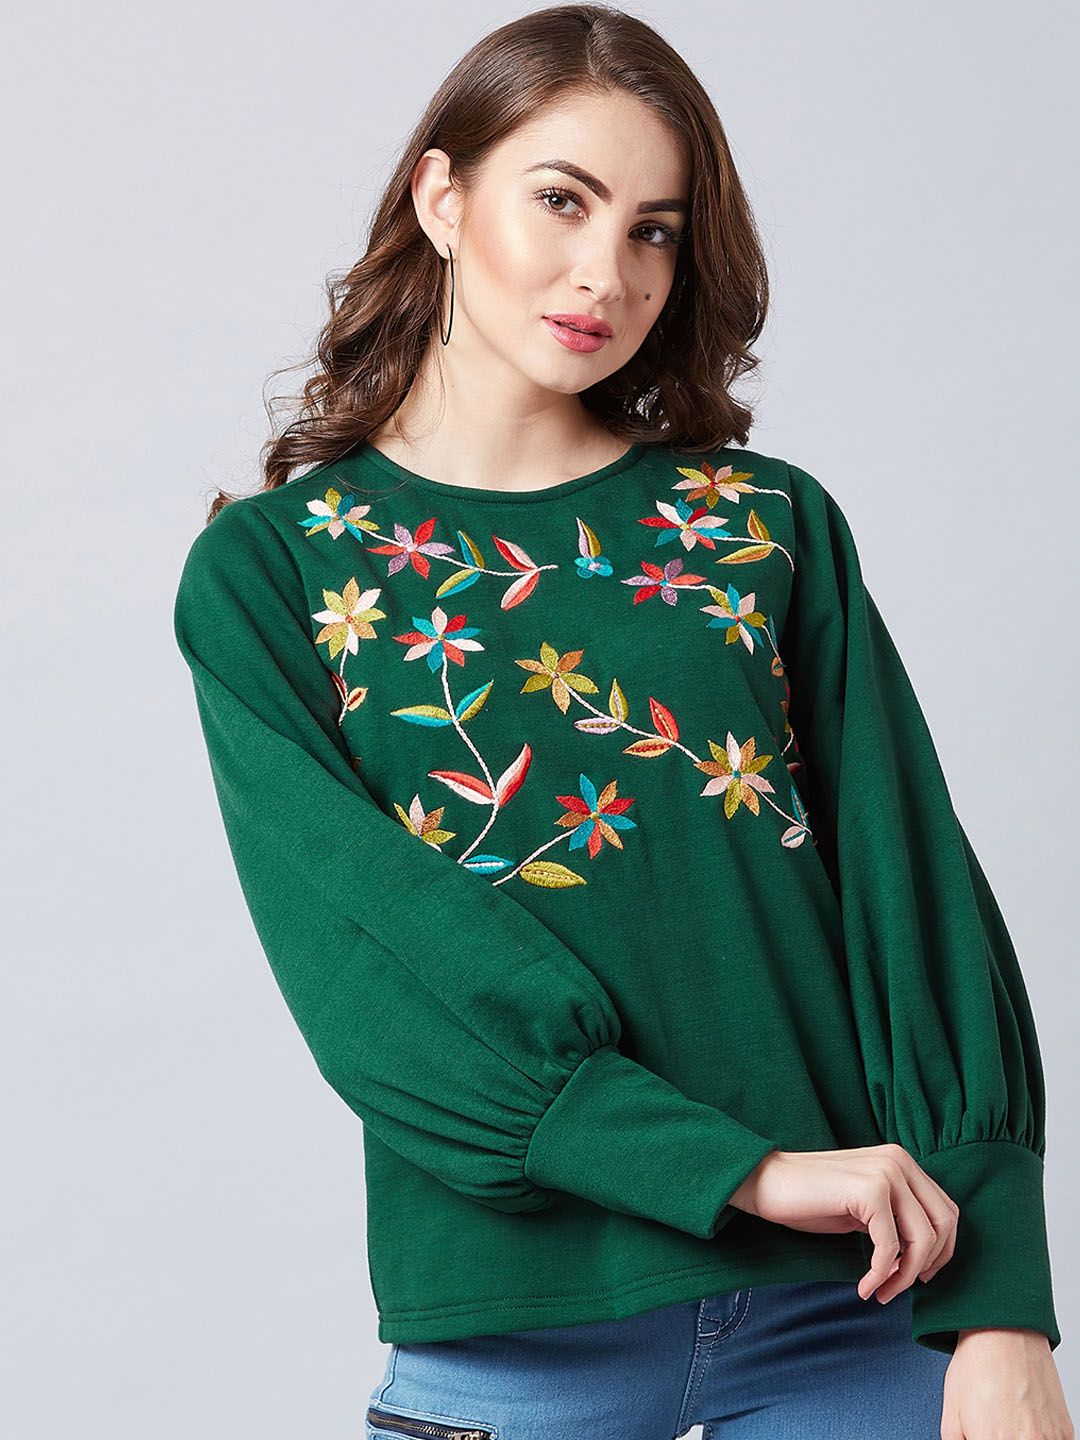 Athena Women Green Embroidered Sweatshirt Price in India